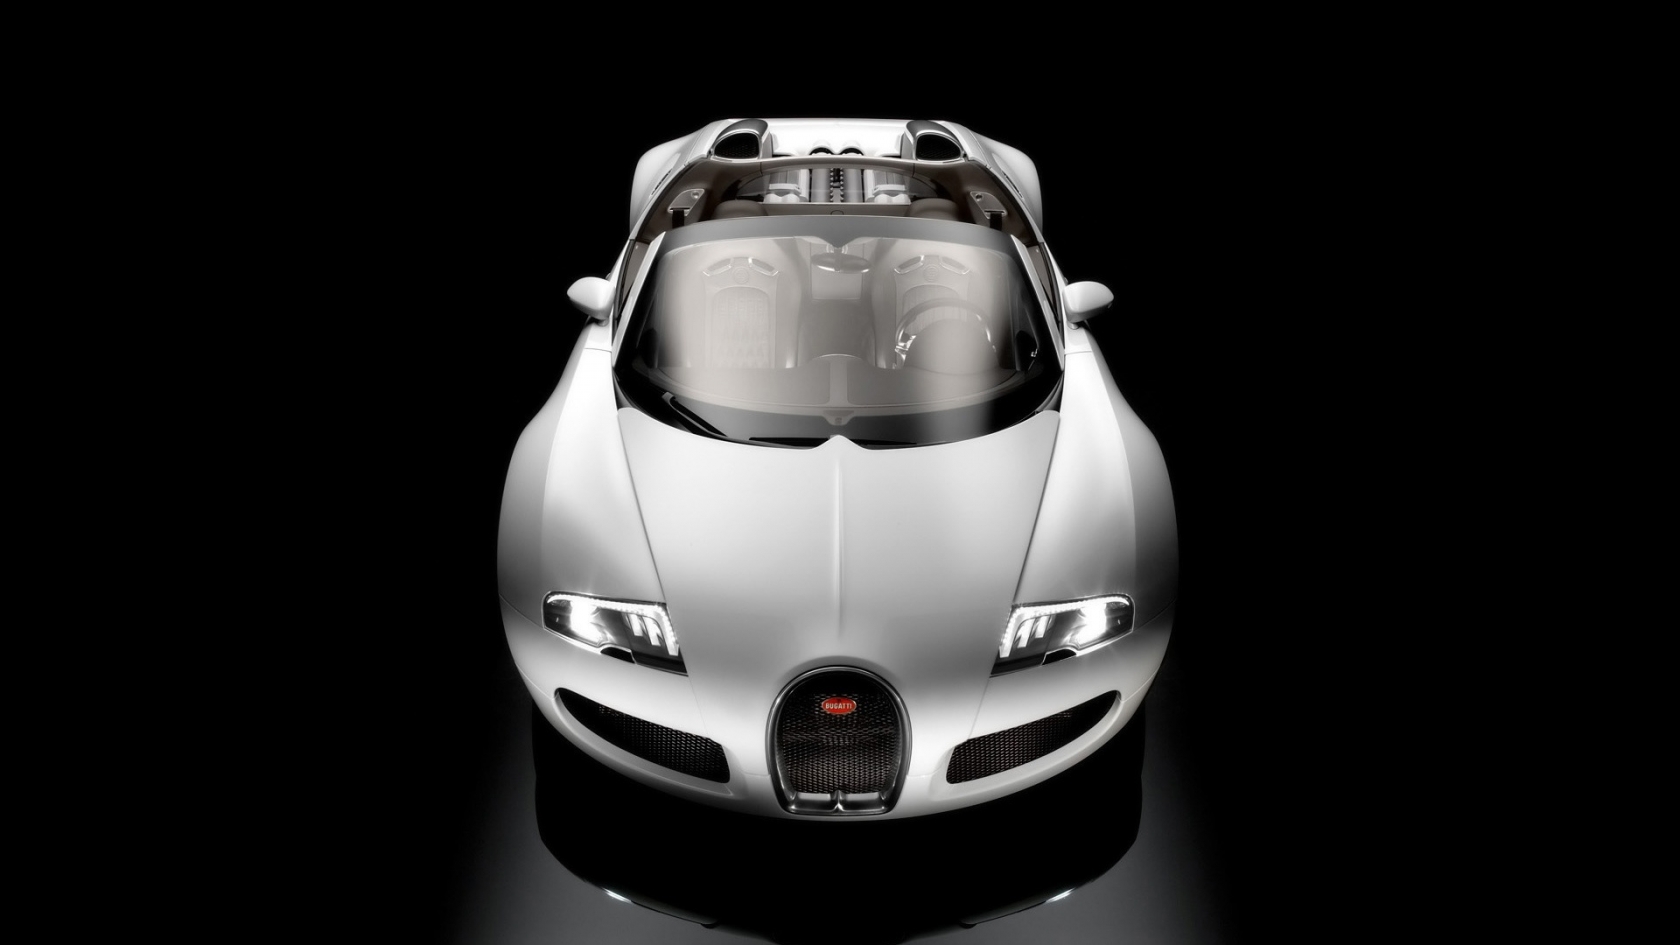 Bugatti Veyron 16.4 Grand Sport Production Version 2009 - Studio Front Top for 1680 x 945 HDTV resolution